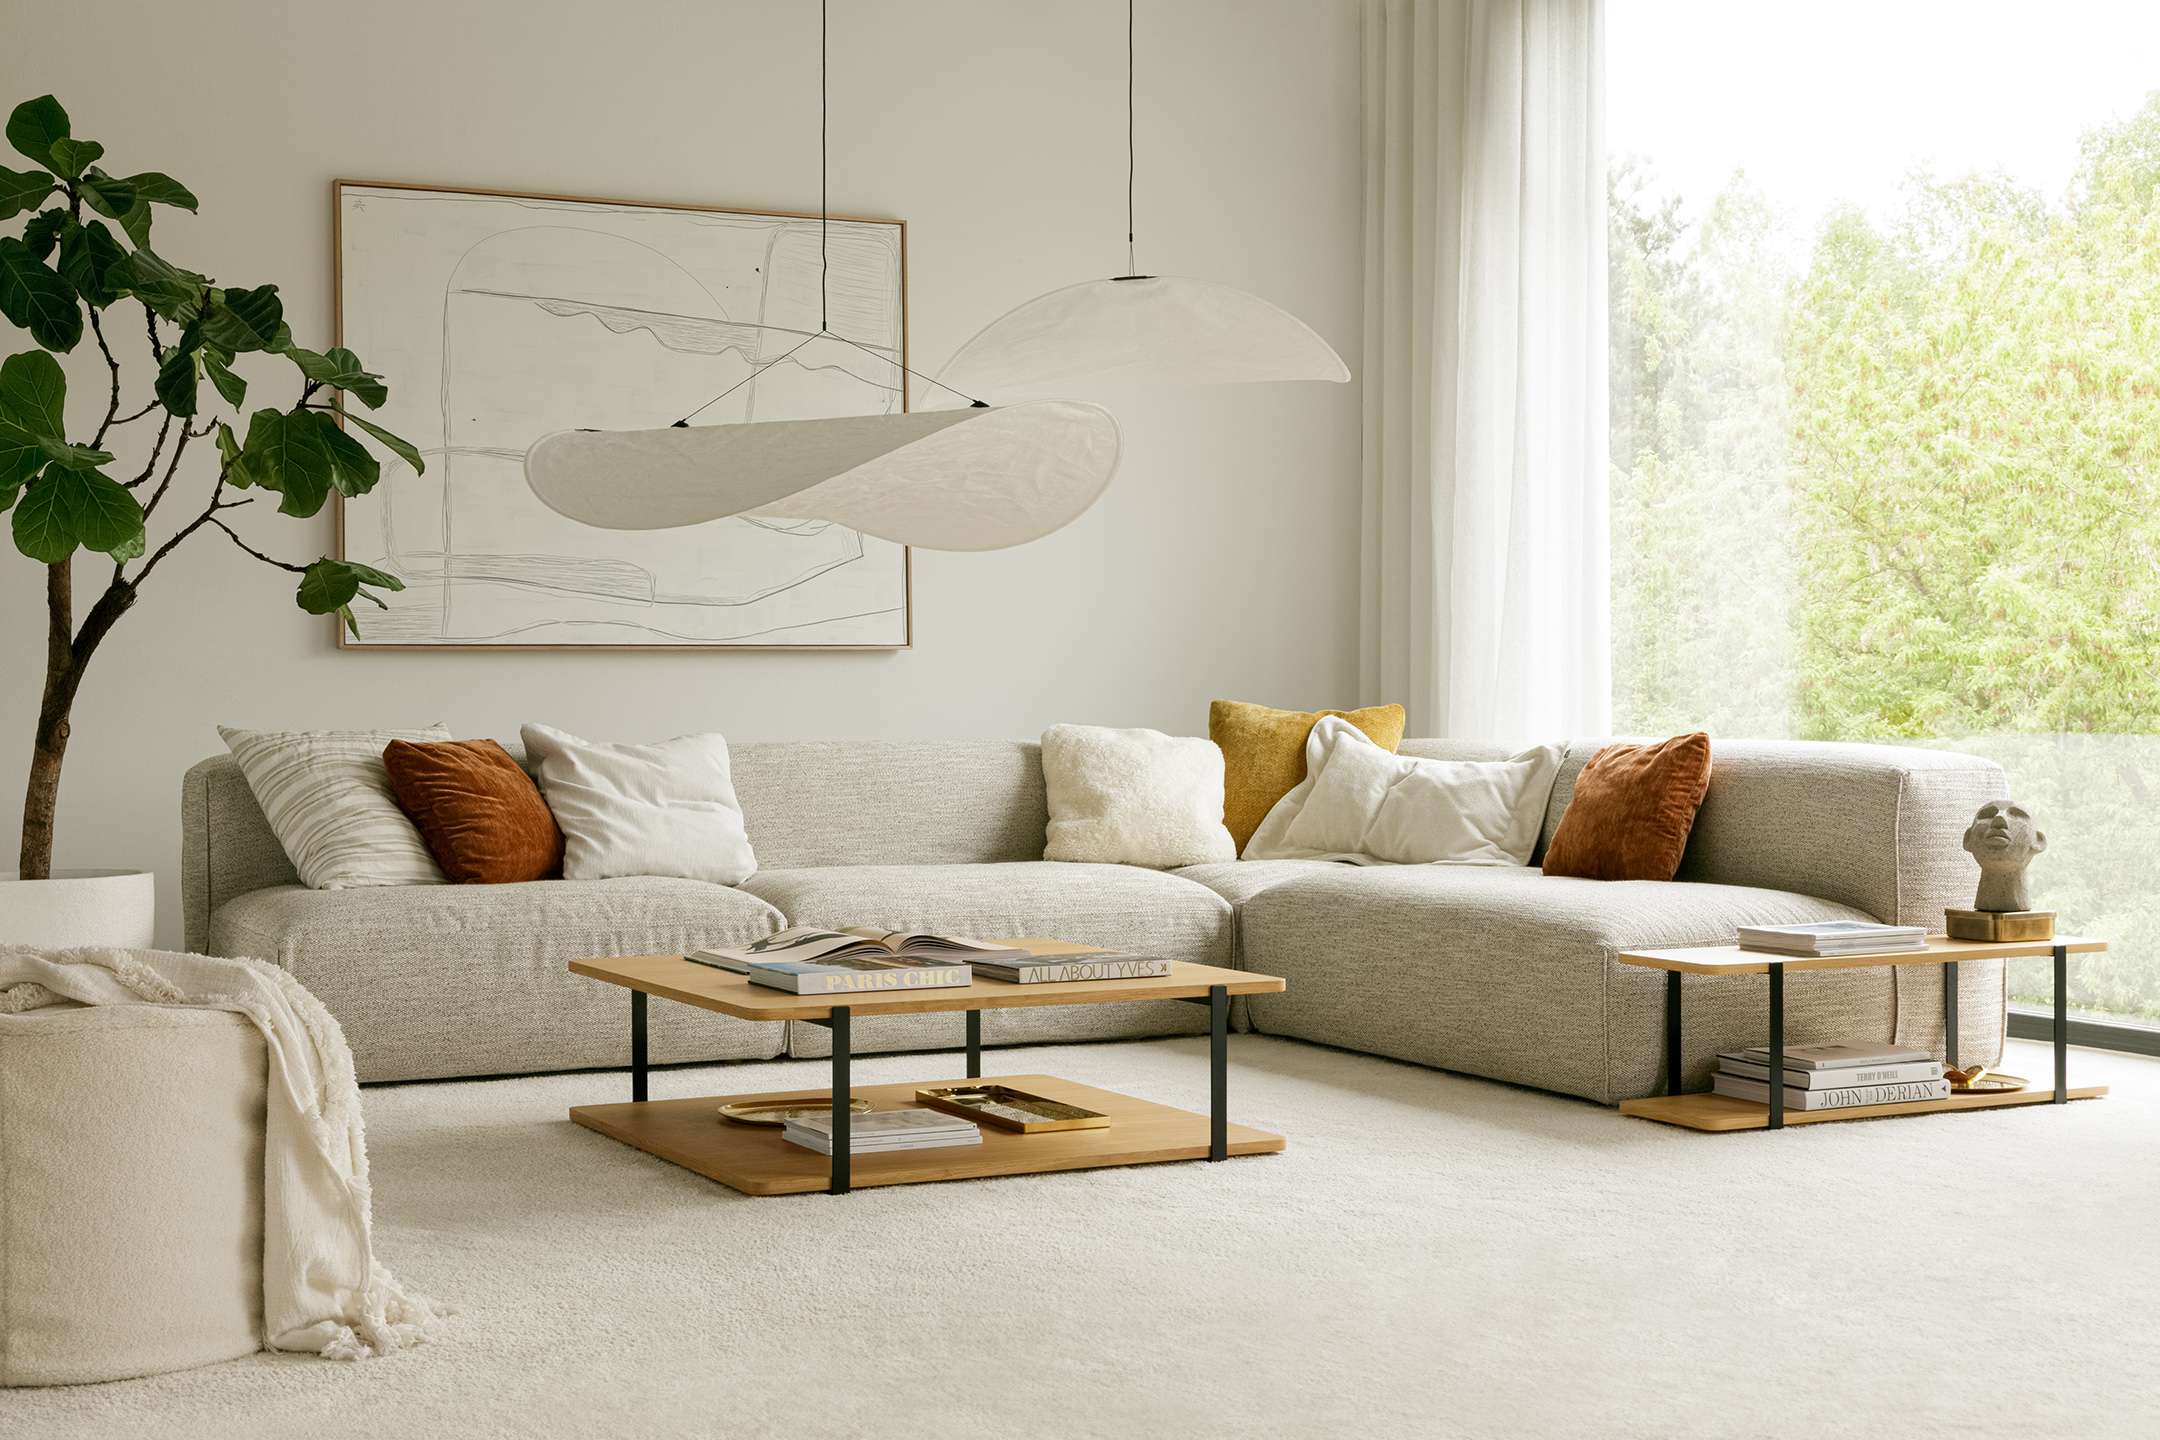 Metamorfoza Home Interiors: muebles contemporáneos e irresistiblemente elegantes